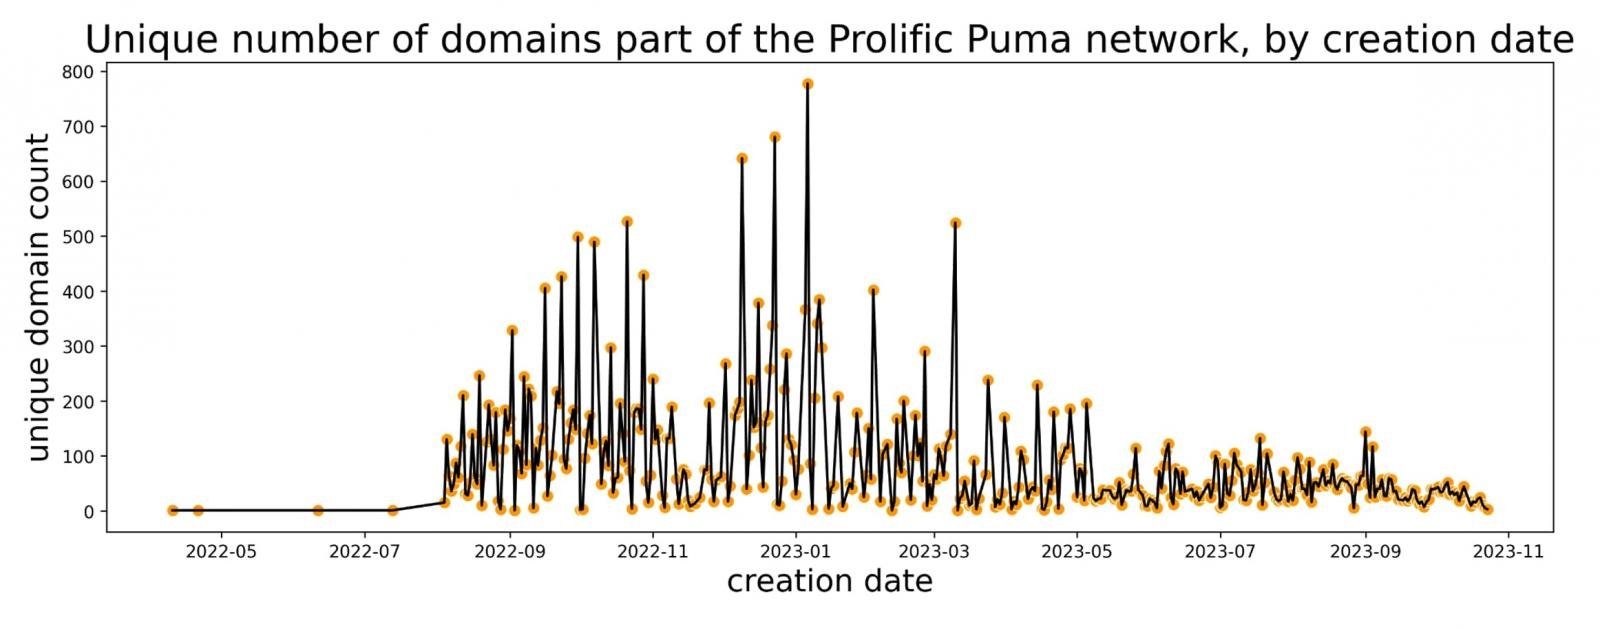 ProlificPuma domain creation